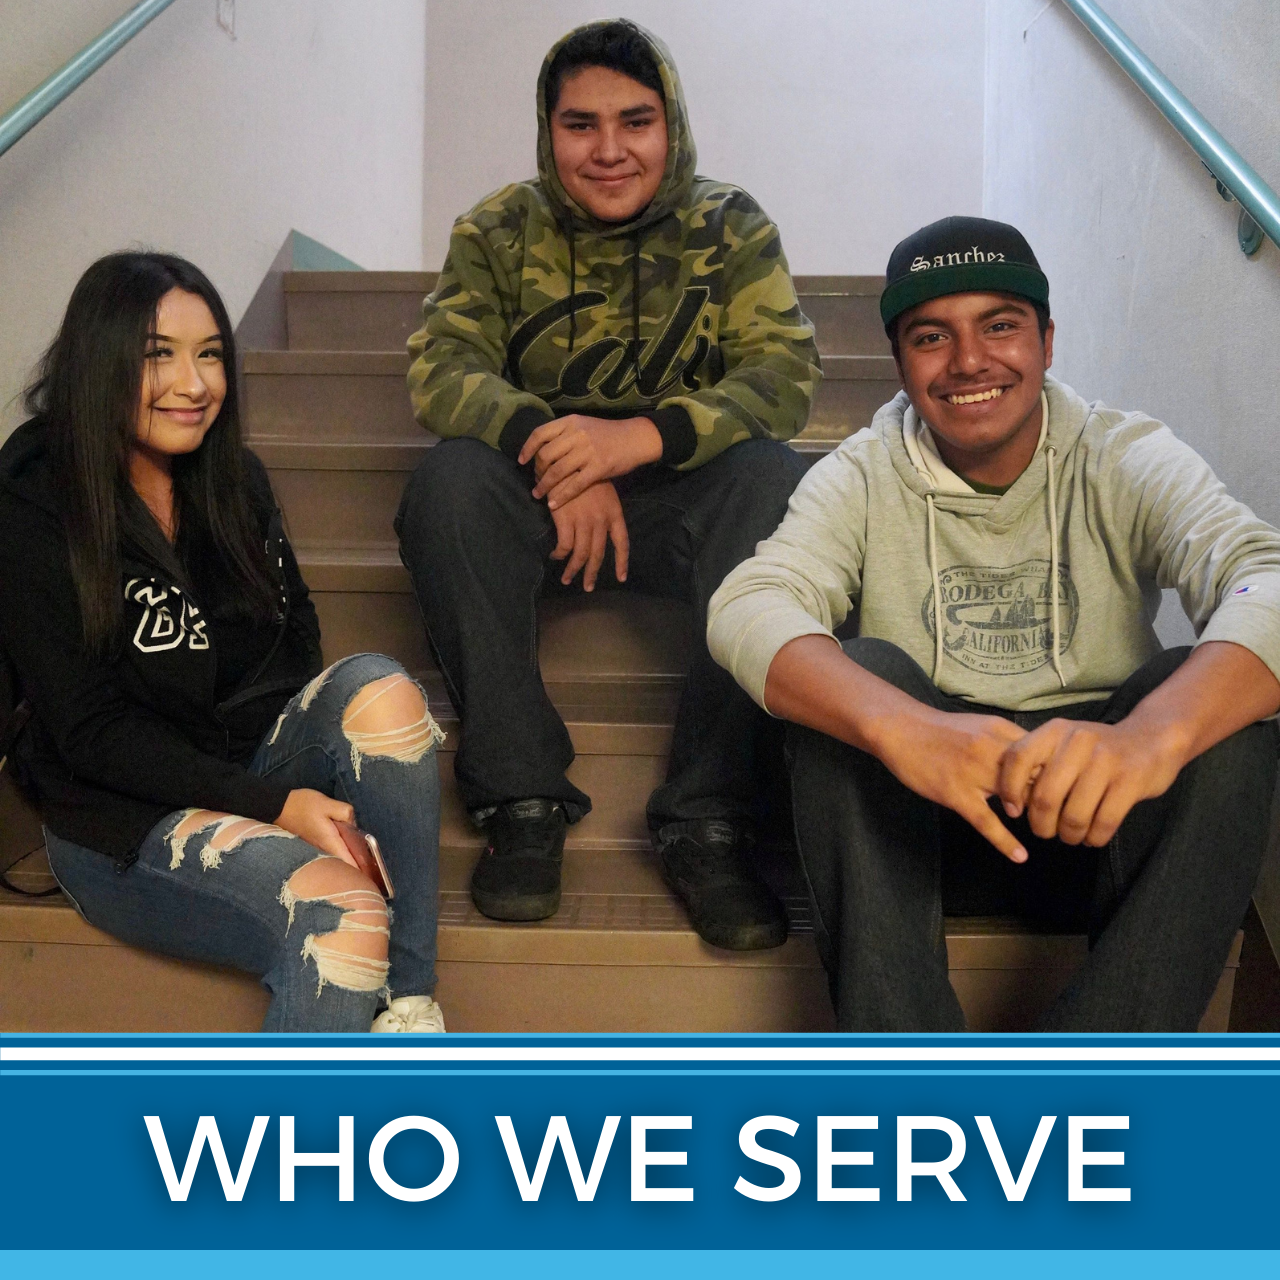 Who We Serve, EAHS Foundation